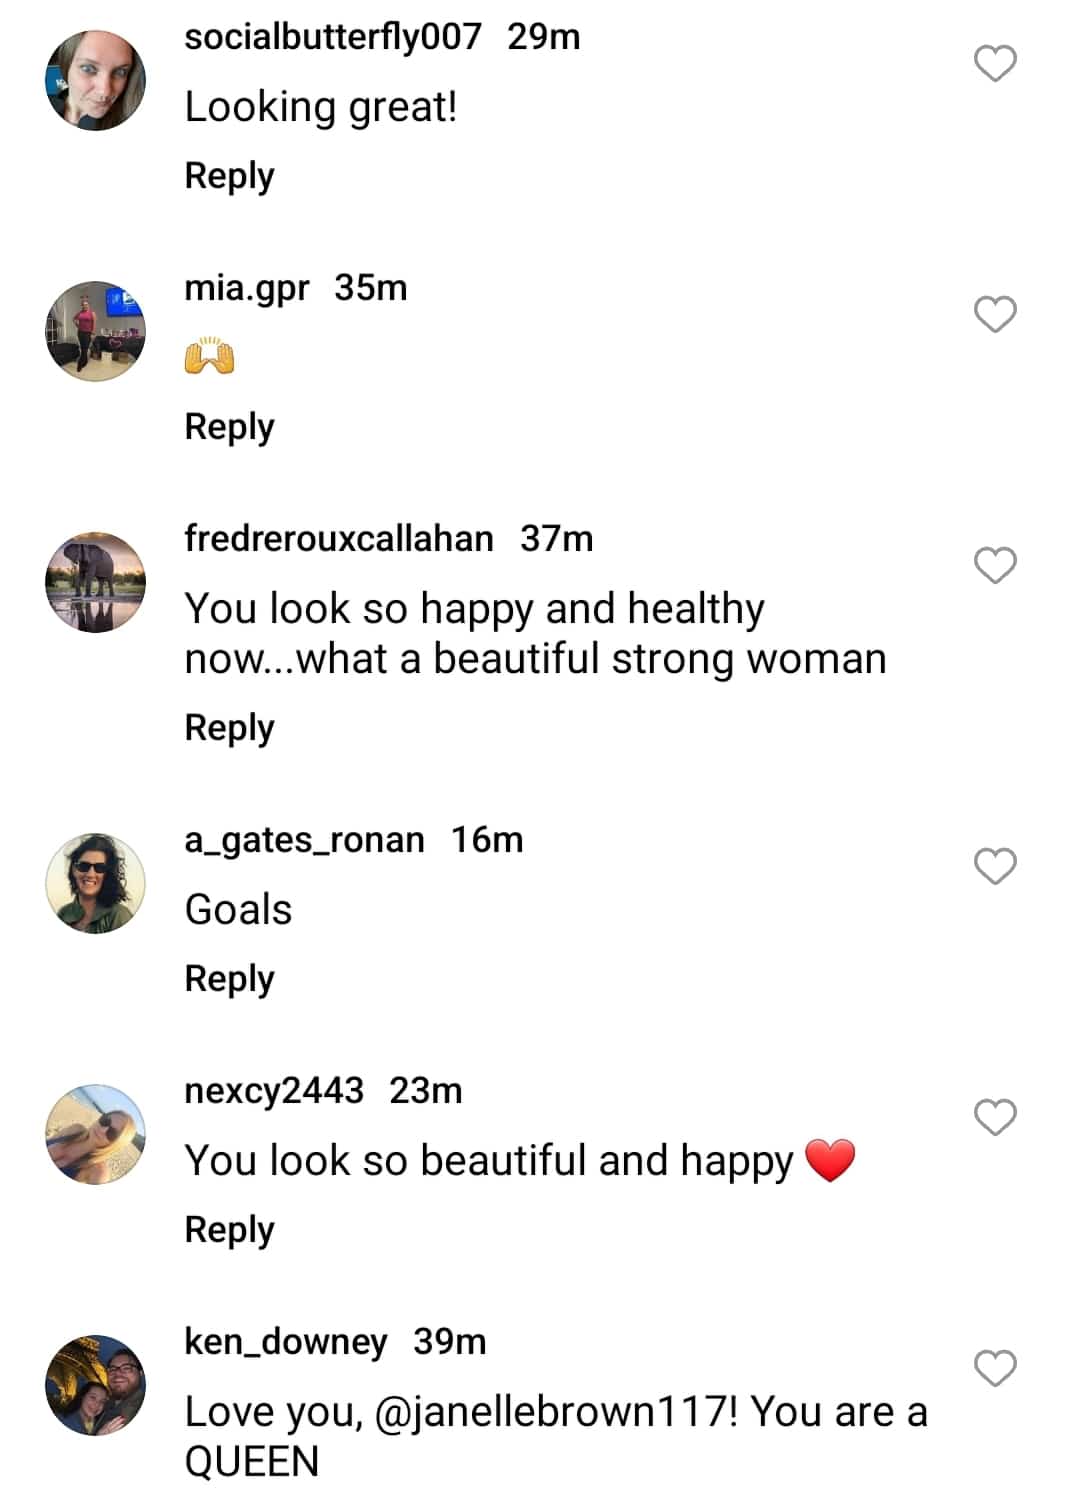 janelle brown's fans comment on her instagram post